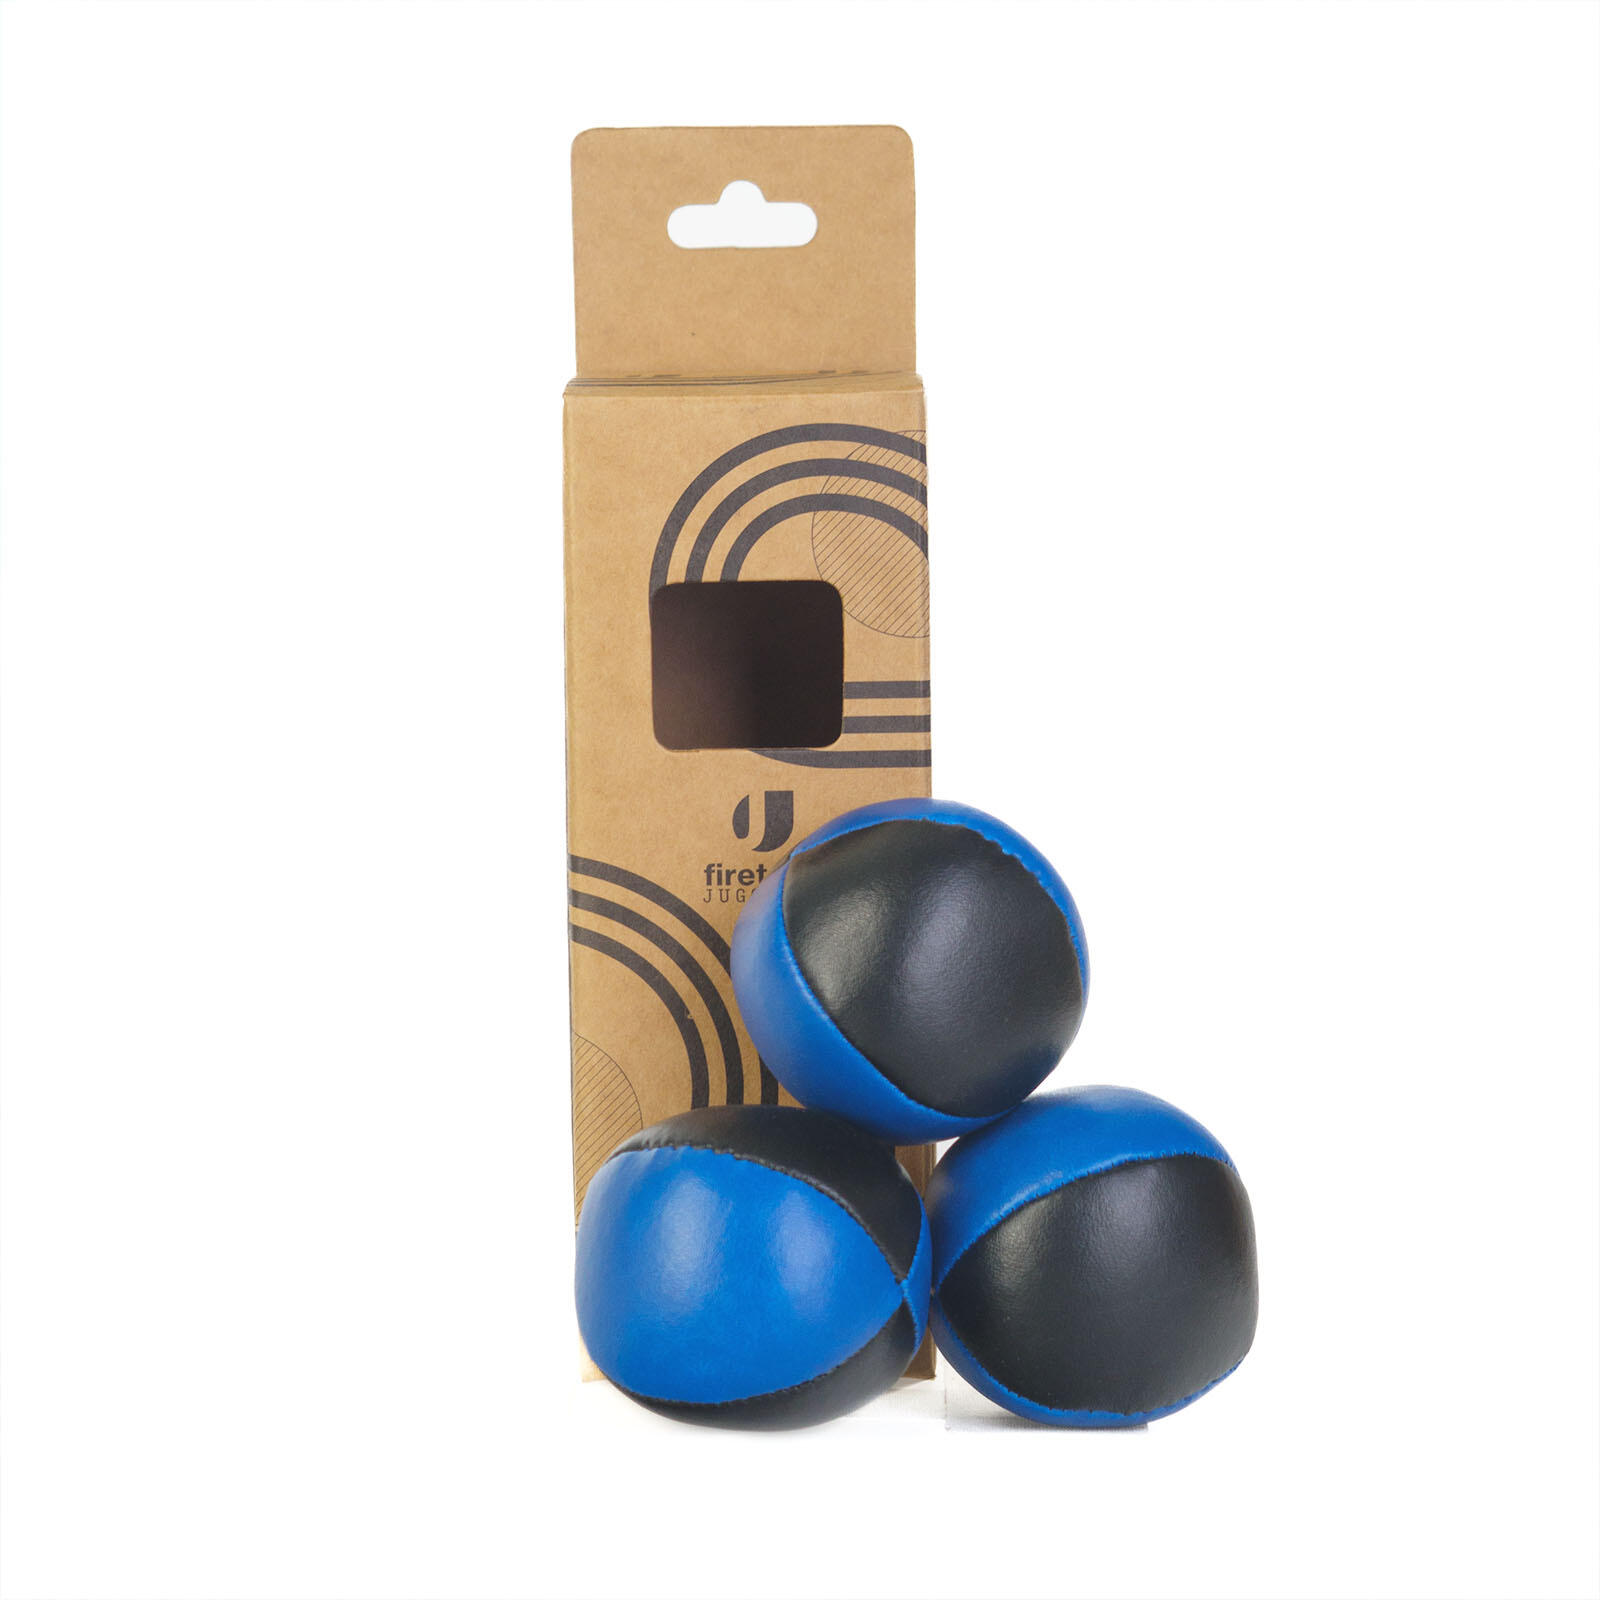 Firetoys Juggling - 120g Thud - Set of 3x Juggling Balls 1/1